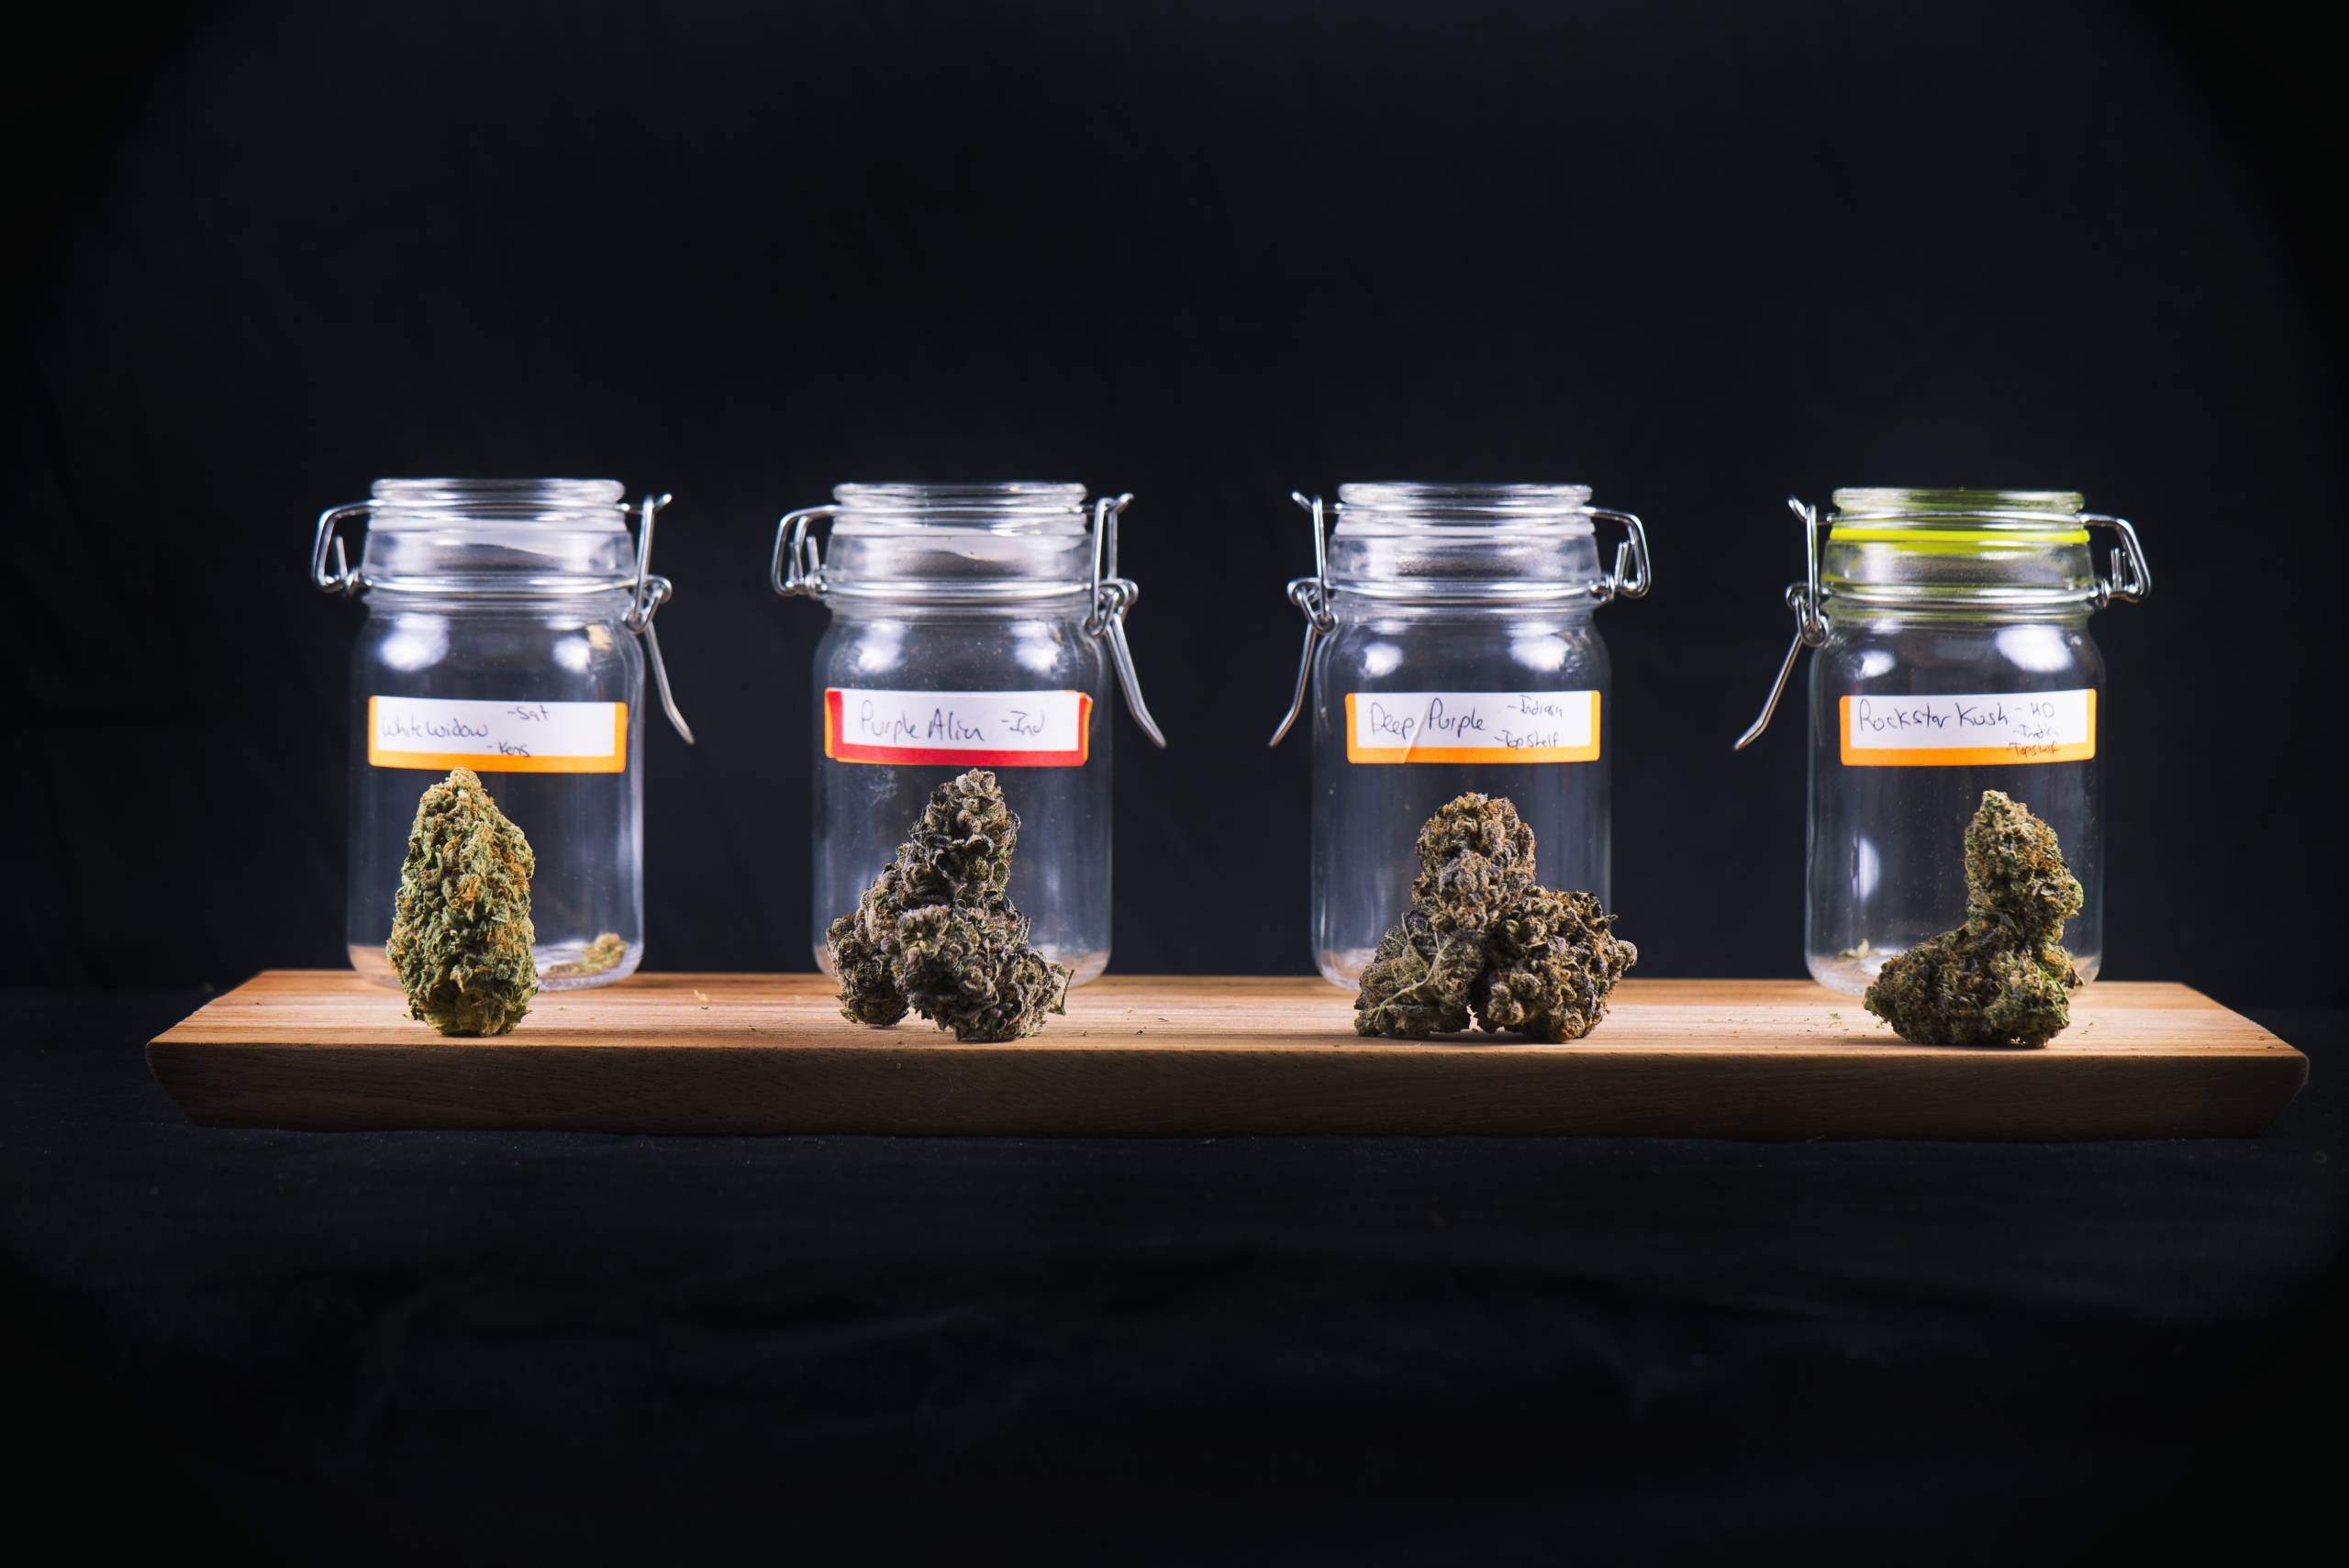 Marijuana prices affect assorted cannabis bud strains and glass jars. SpeedGreens